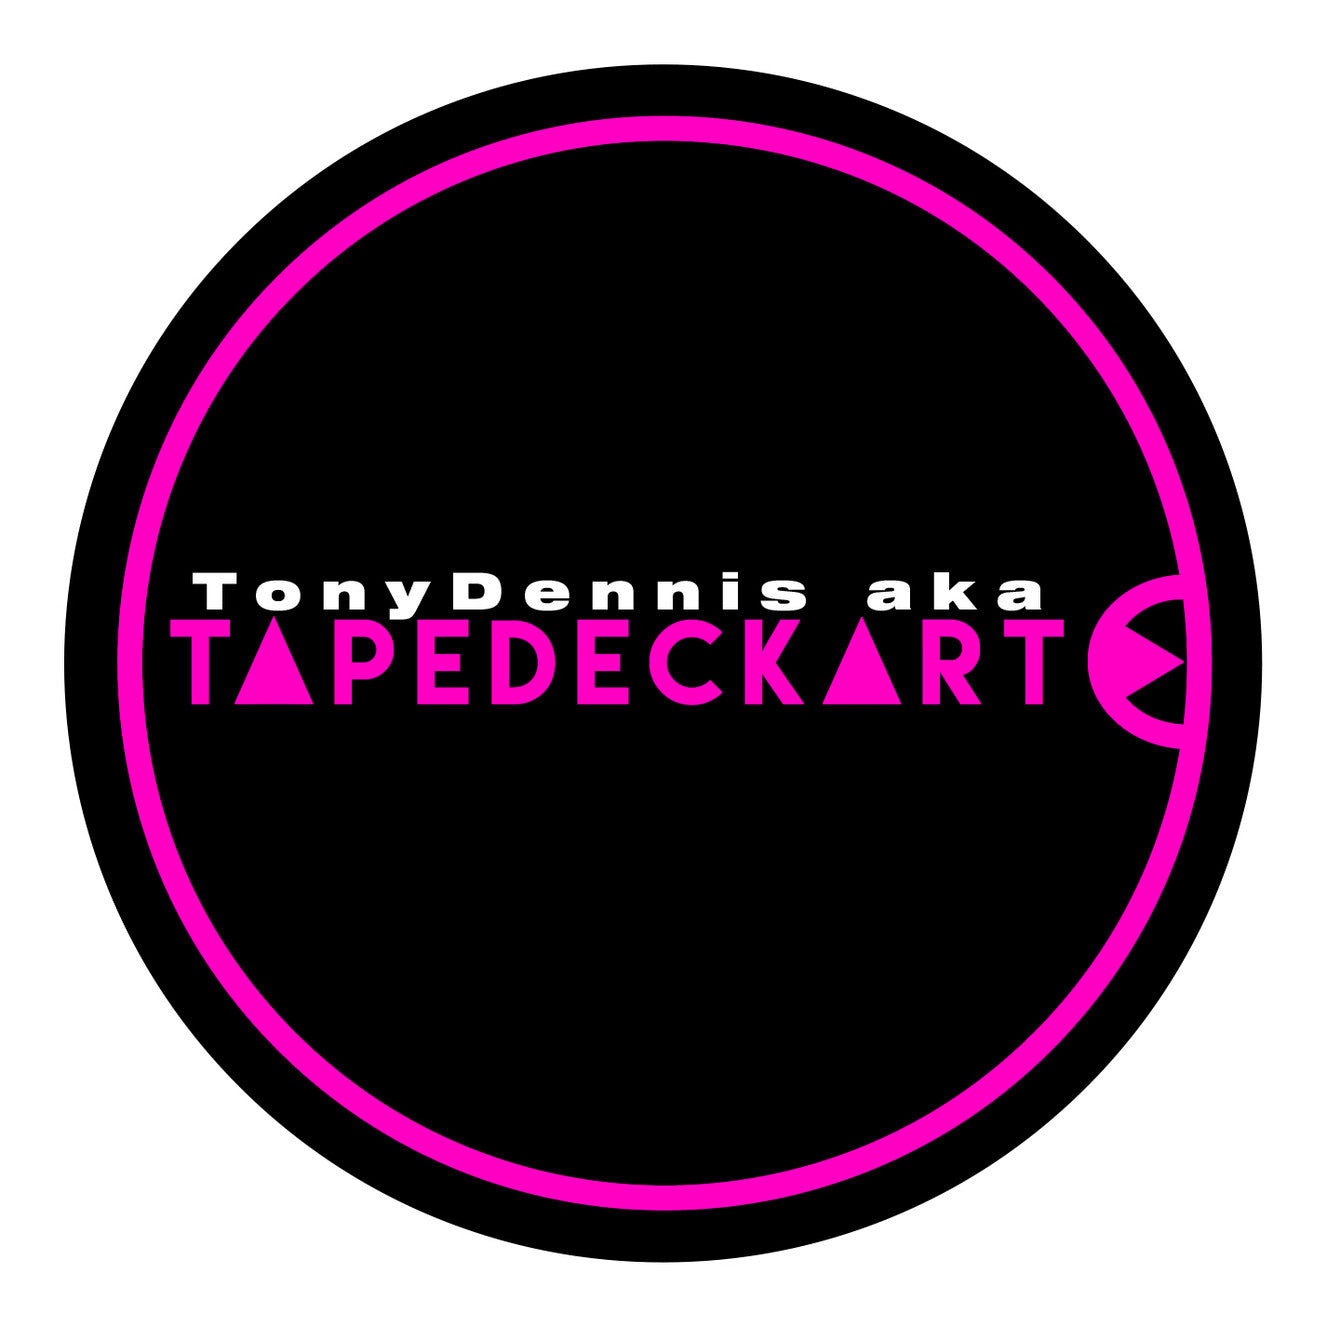 Tape Deck Art